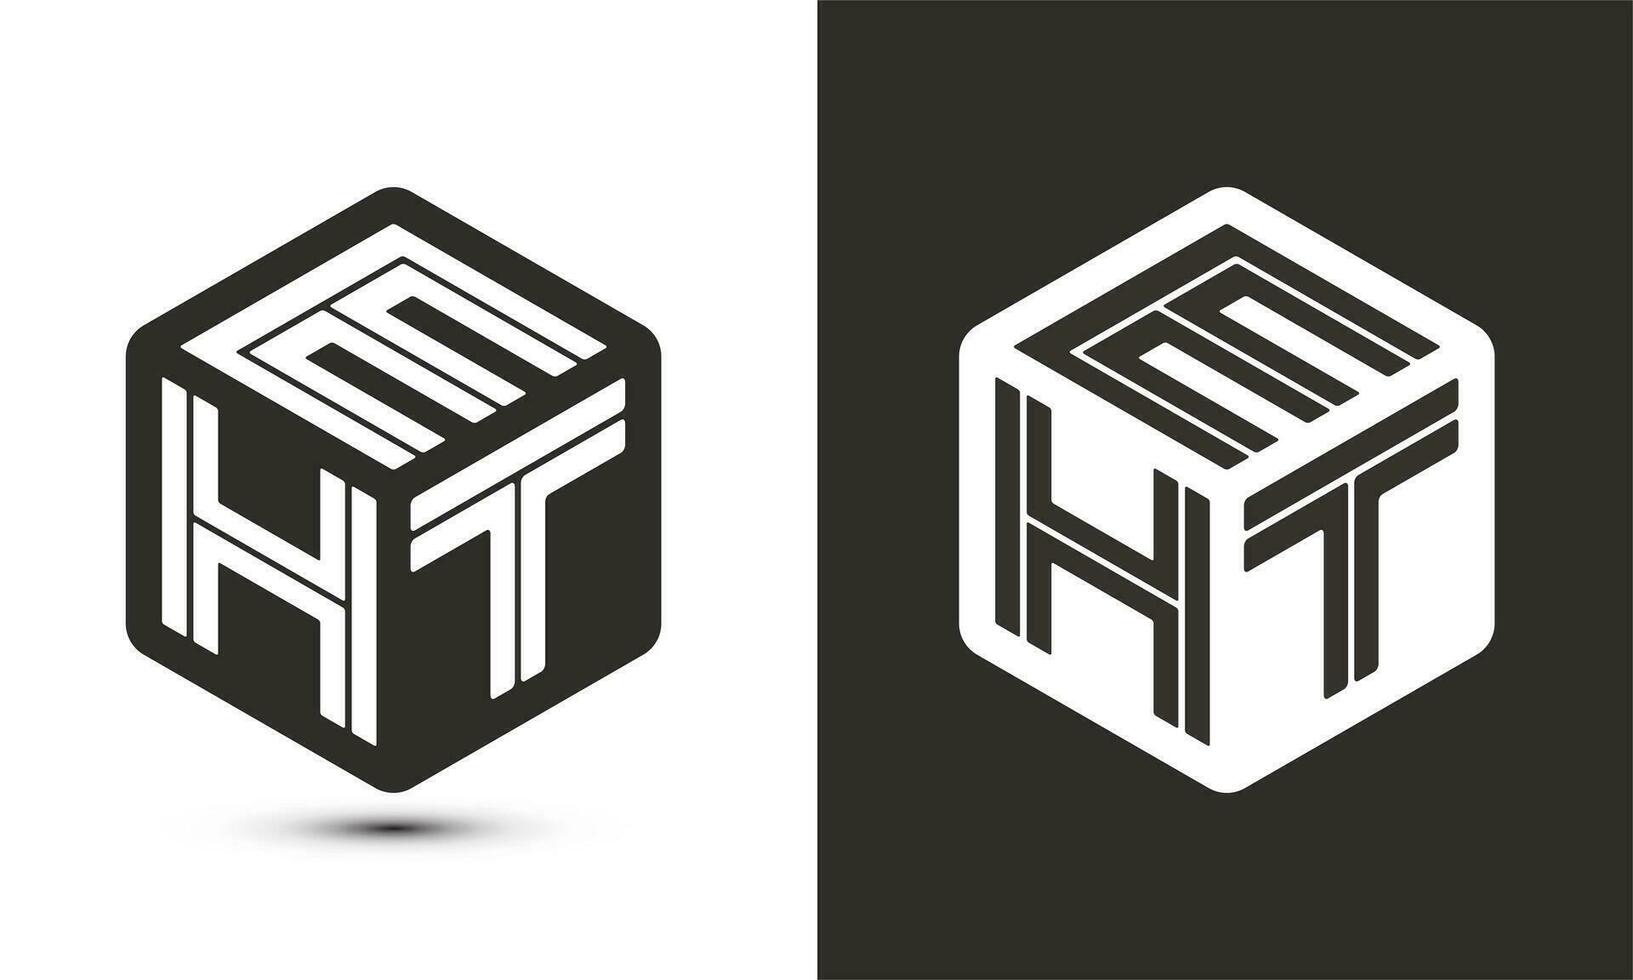 eht letra logo diseño con ilustrador cubo logo, vector logo moderno alfabeto fuente superposición estilo.